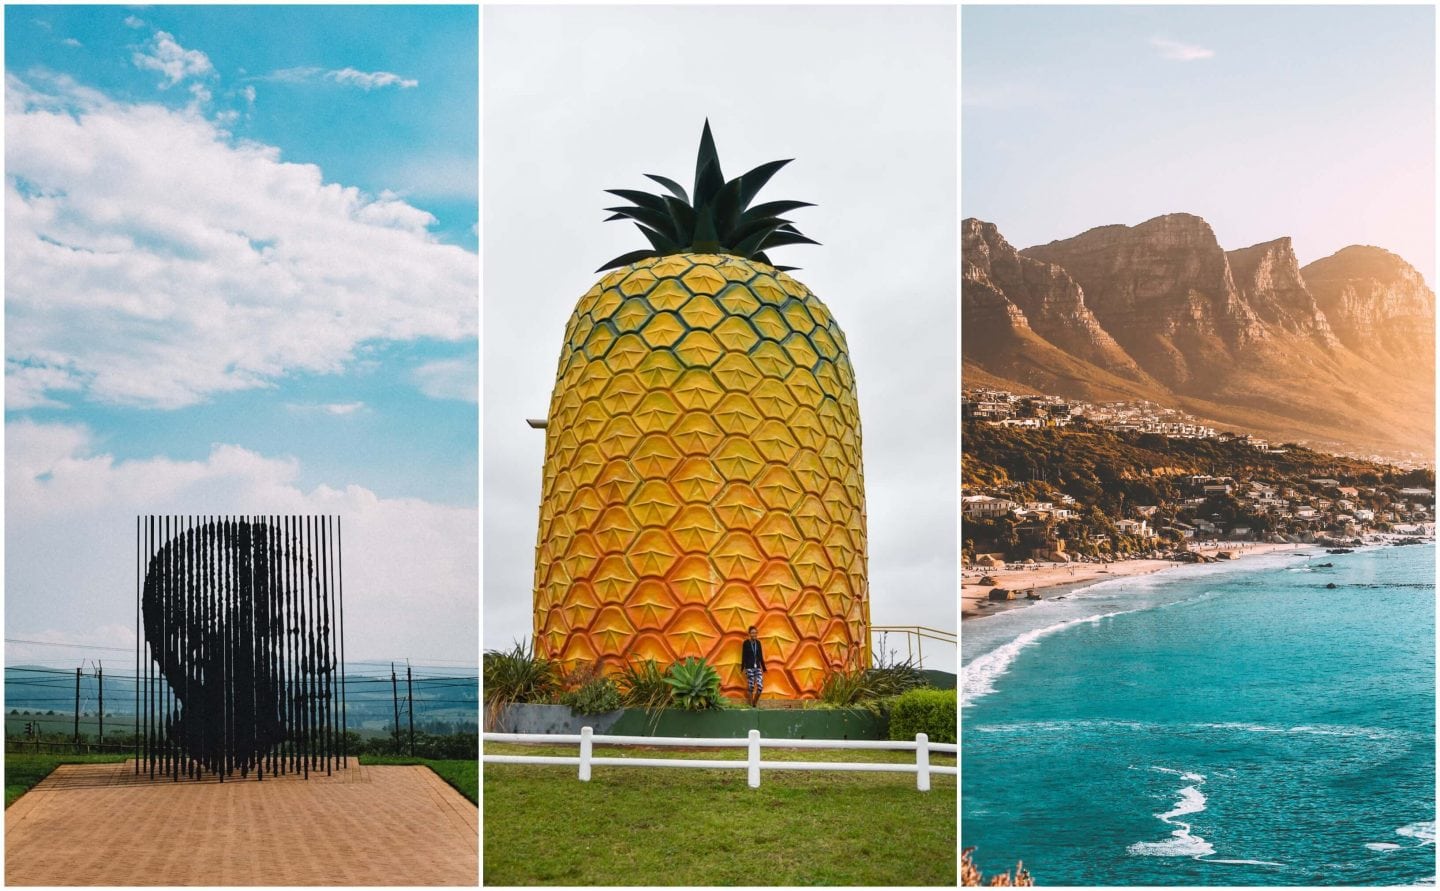 Landmarks in South Africa